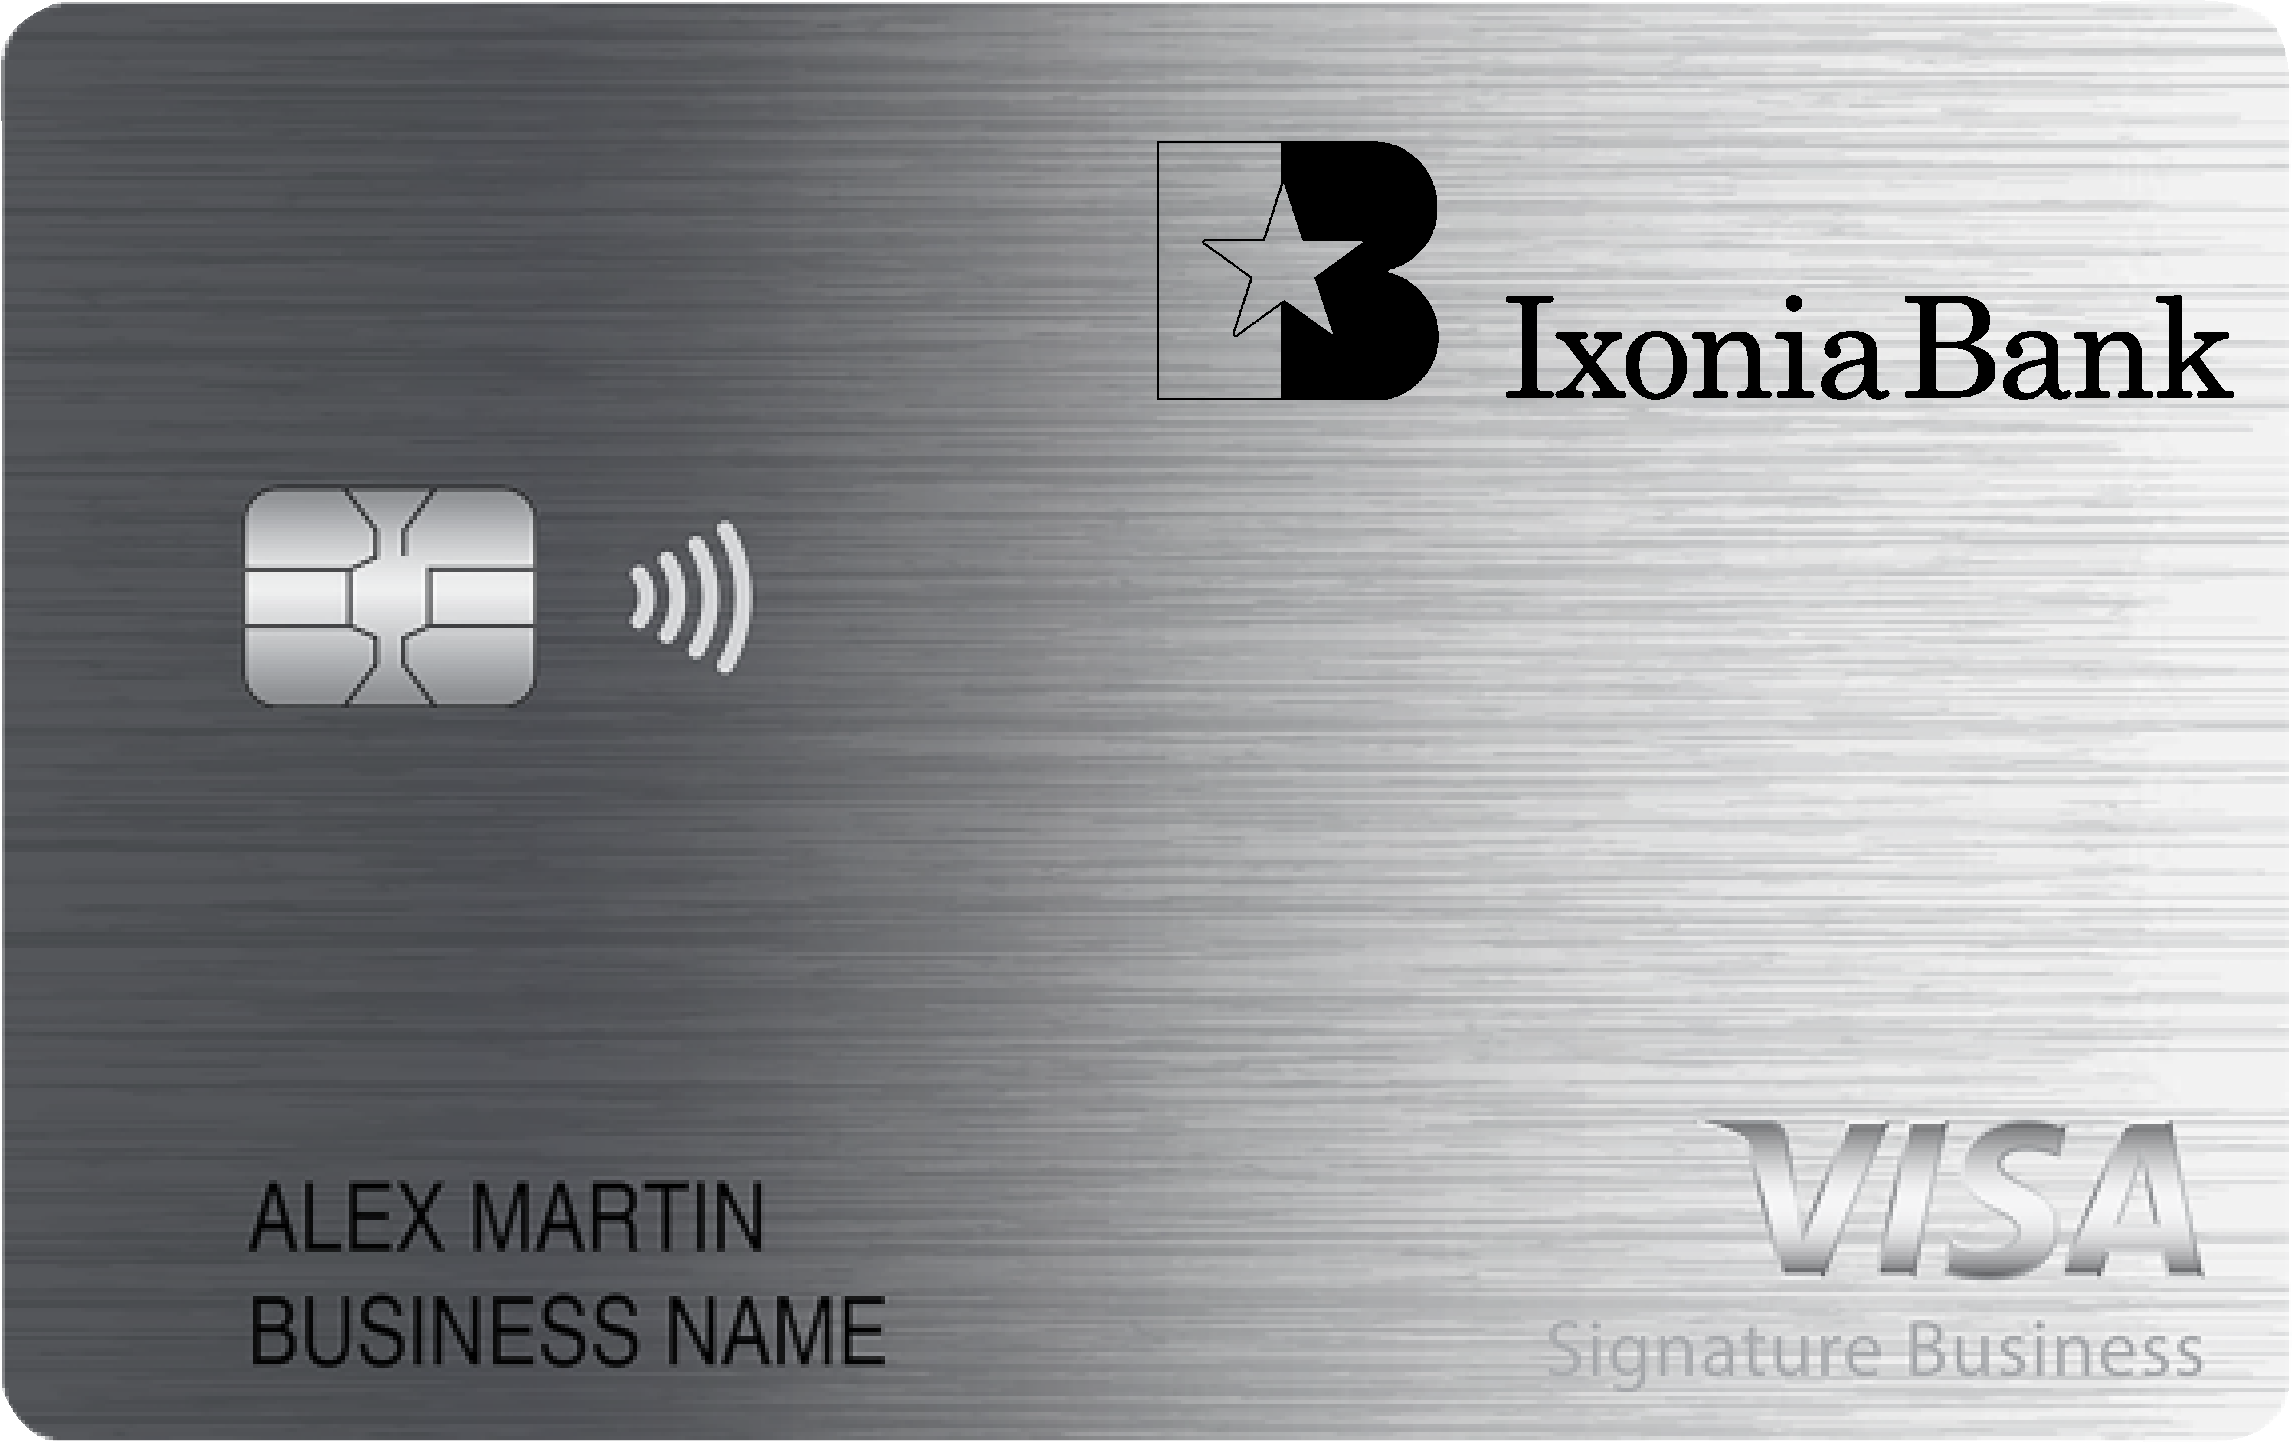 Ixonia Bank Smart Business Rewards Card